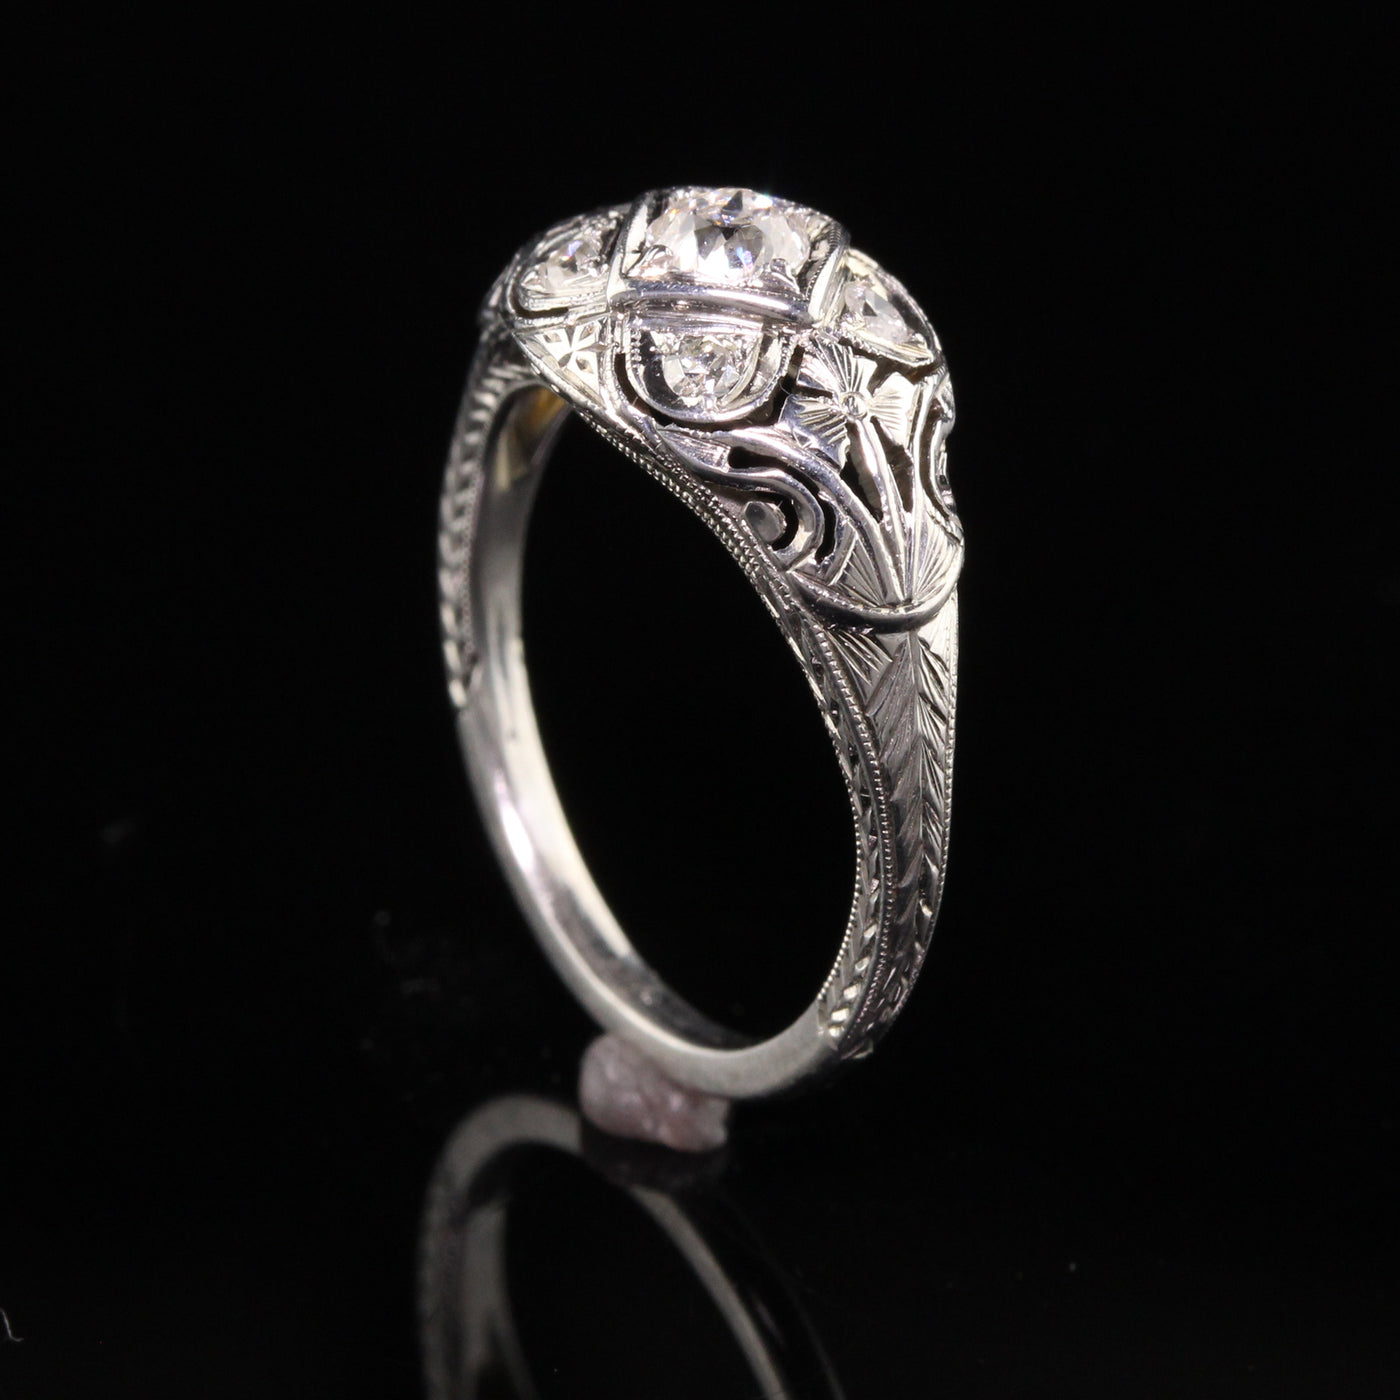 Antique Art Deco Barth 18K White Gold Old European Diamond Ring